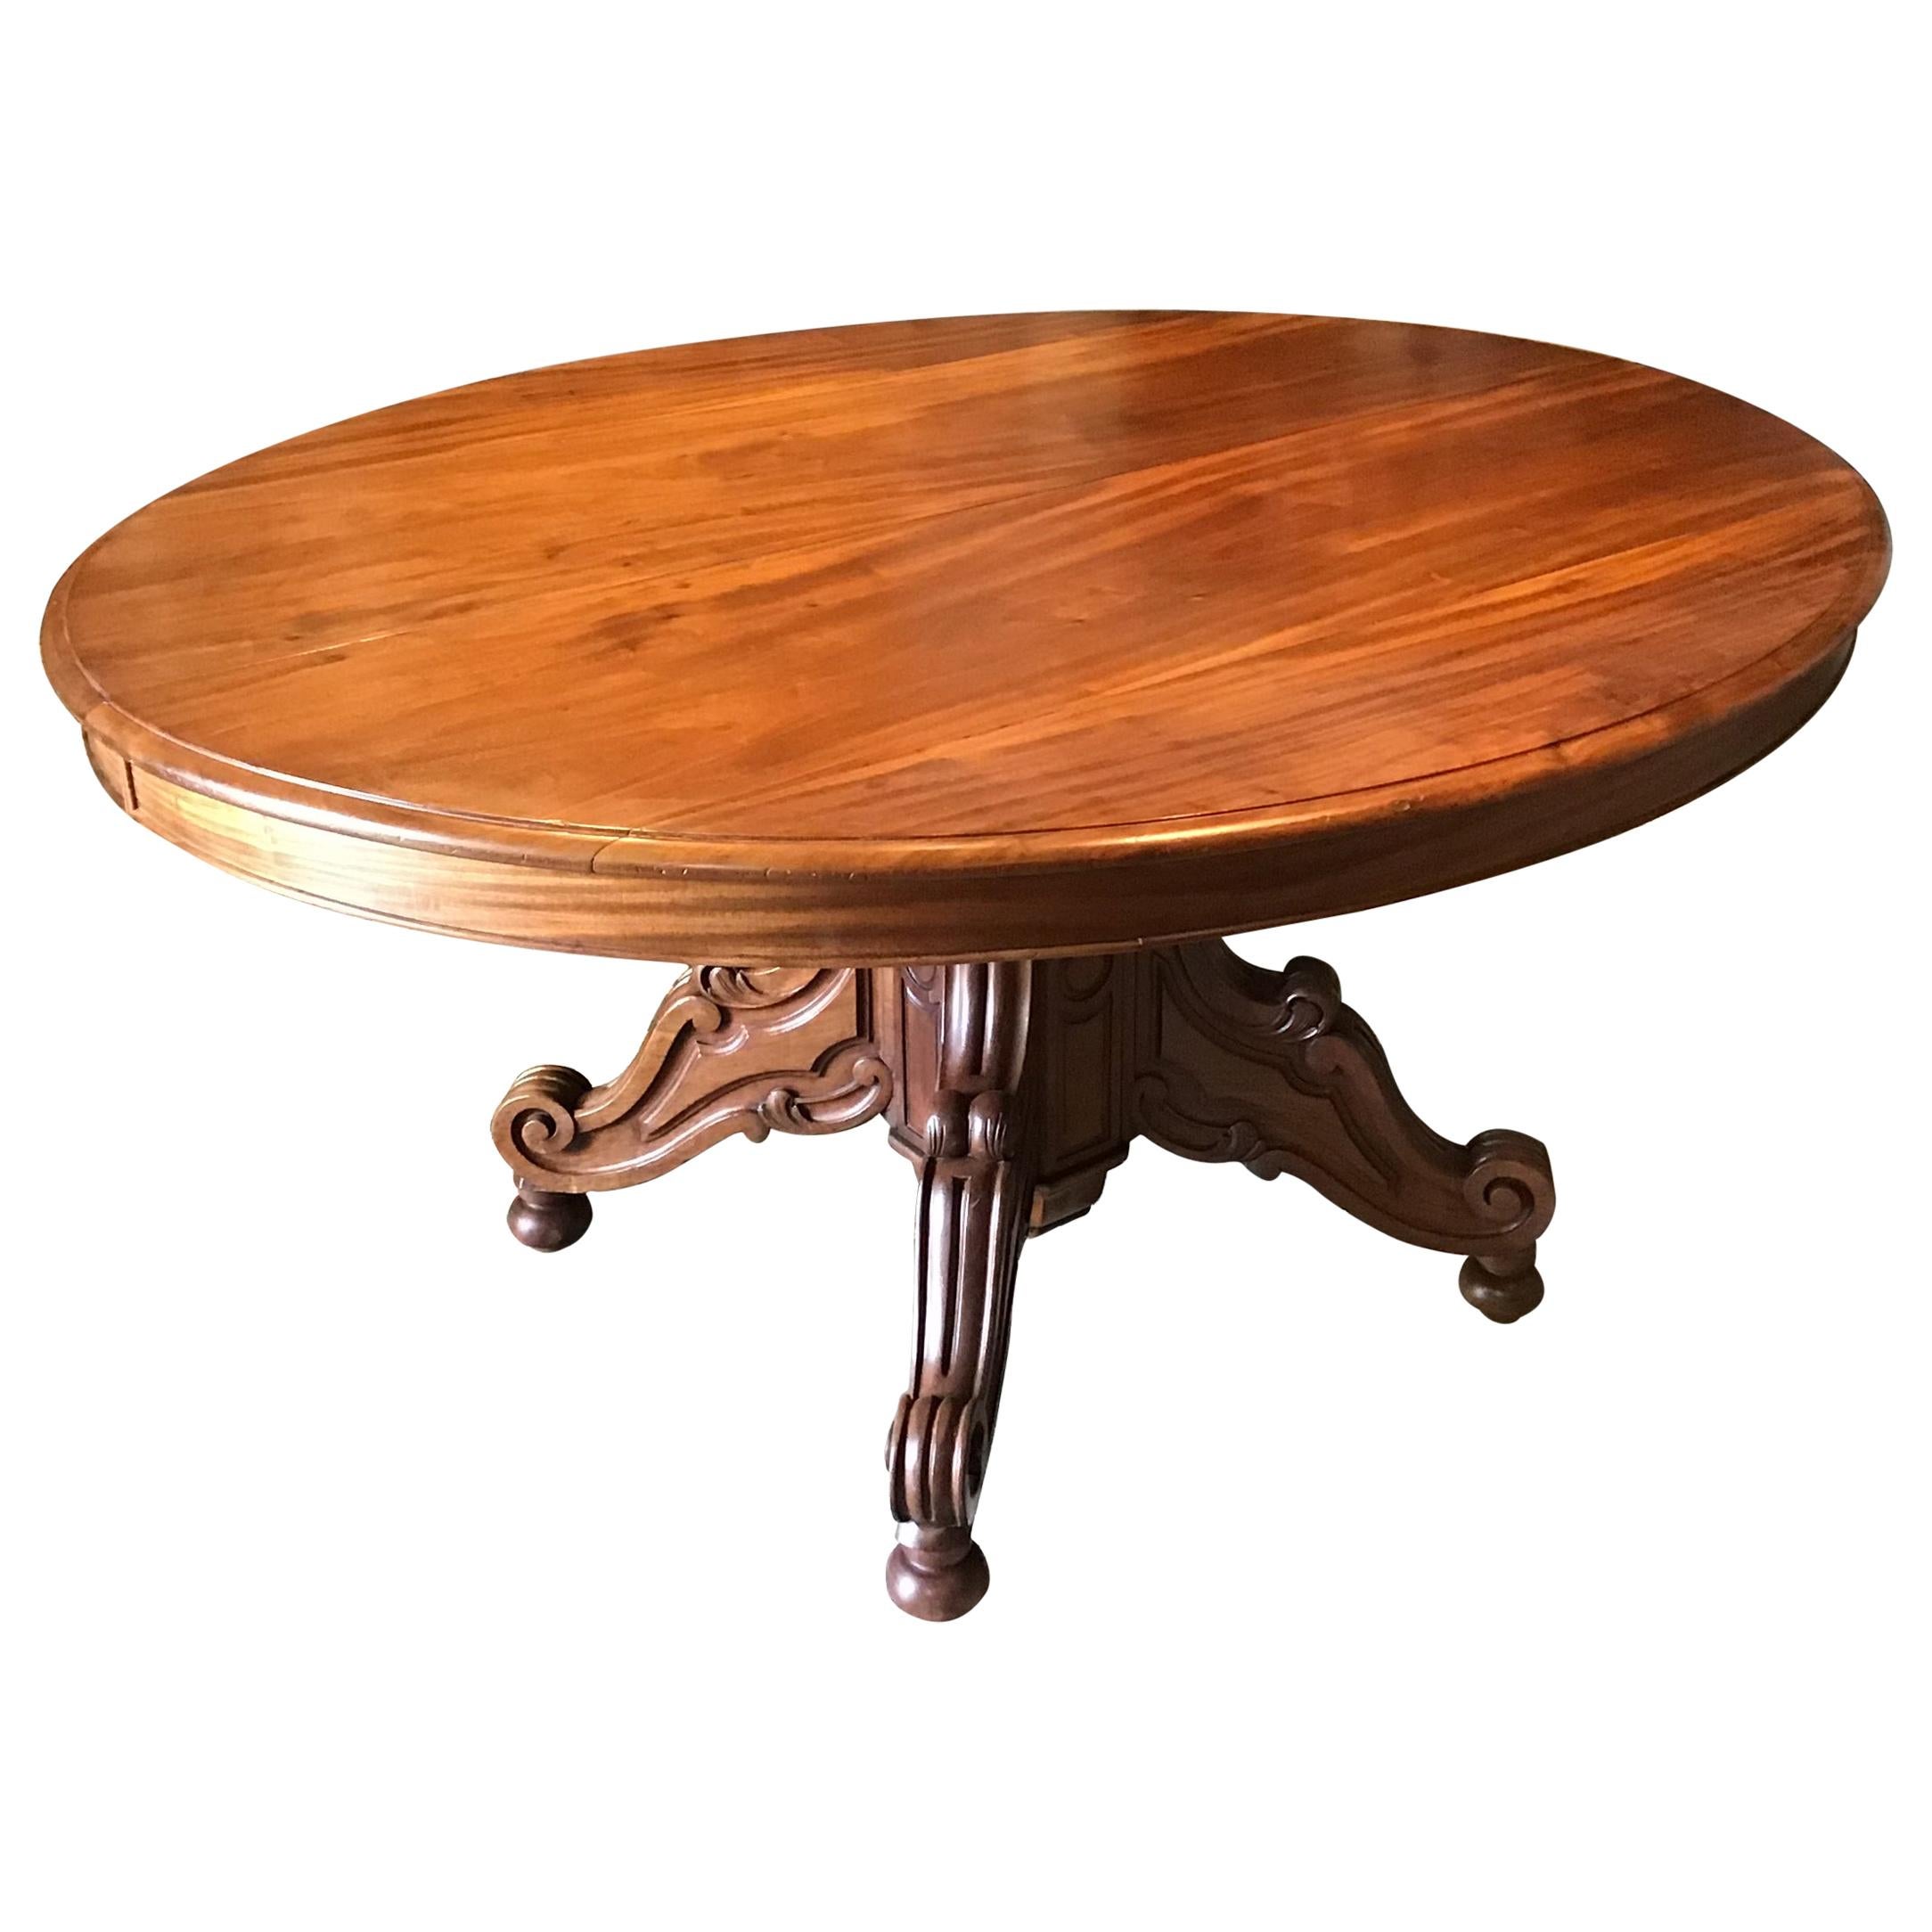 19th Century English Mahogany Extendible Oval Dining Table, 1890s